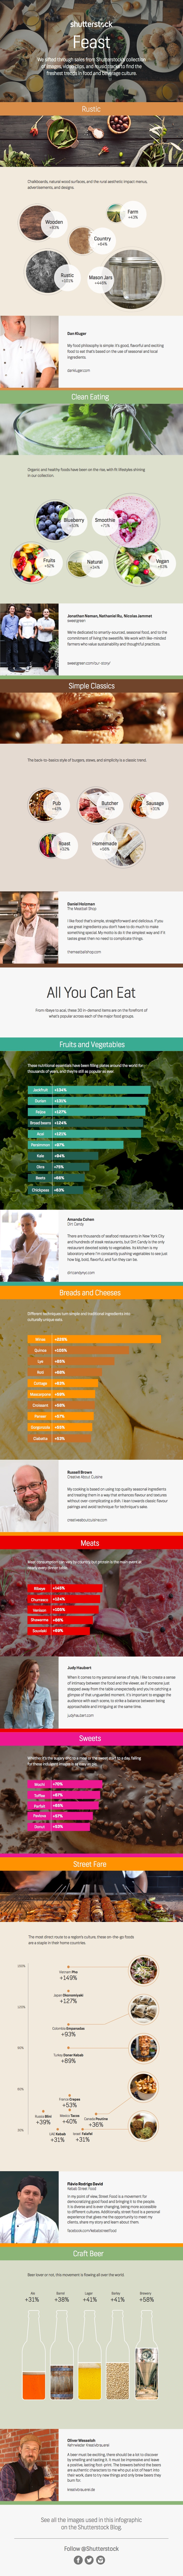 infographic-FoodBeverage-blog-1